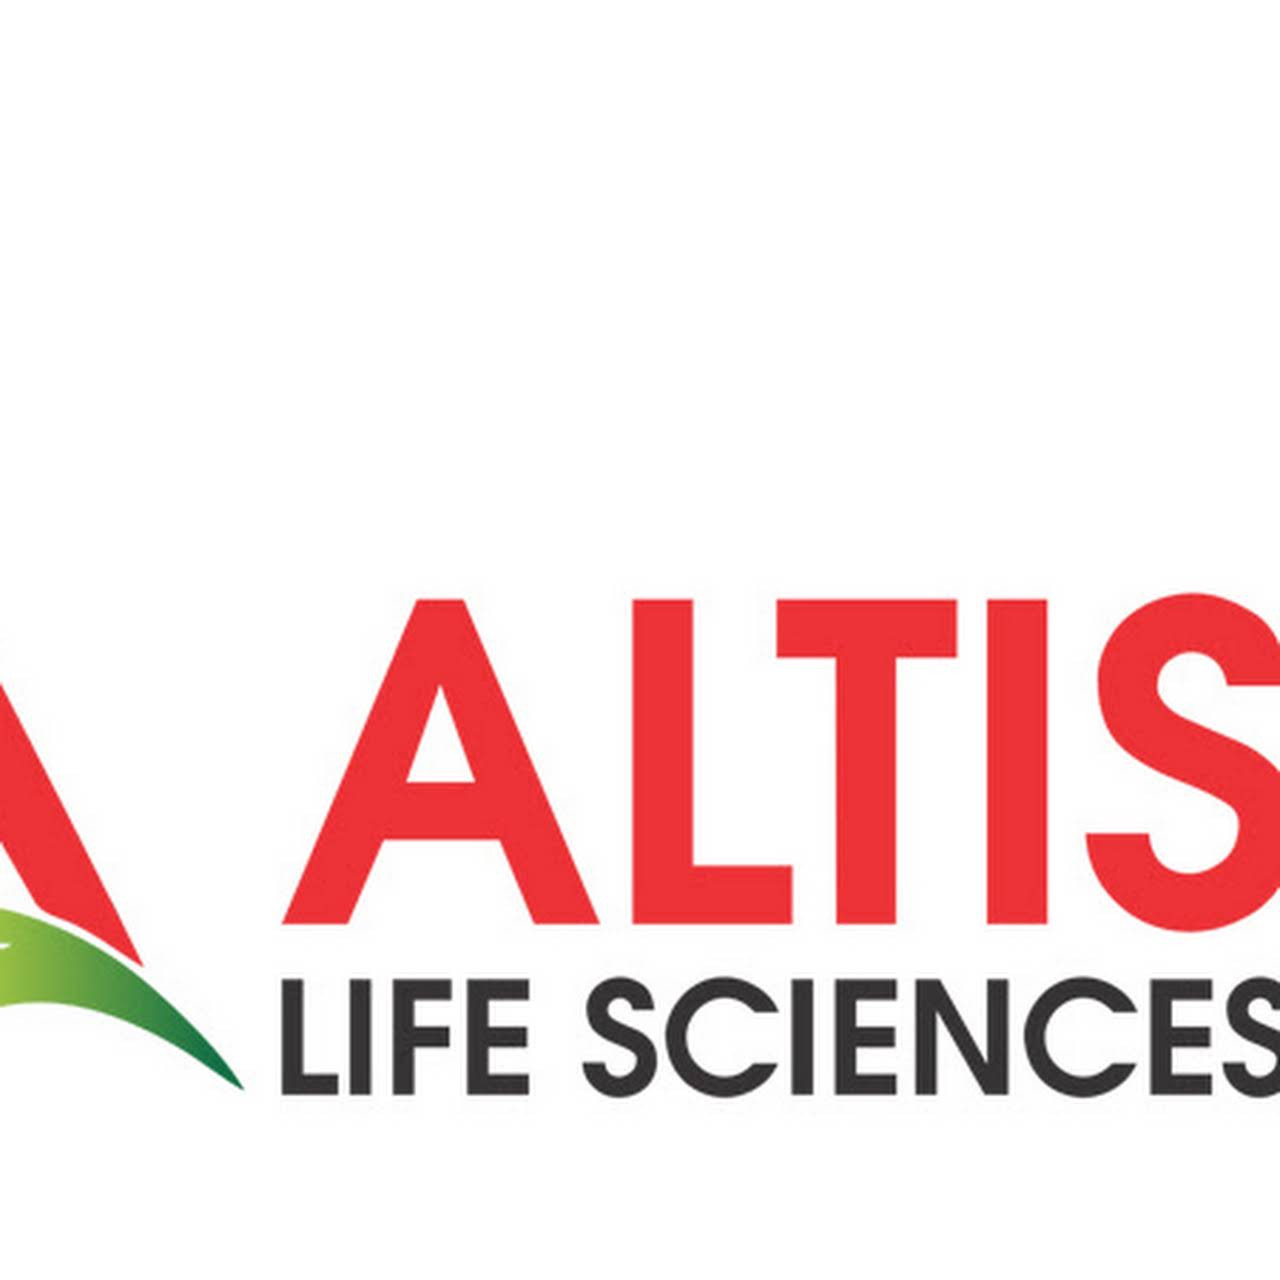 Altis Life Sciences